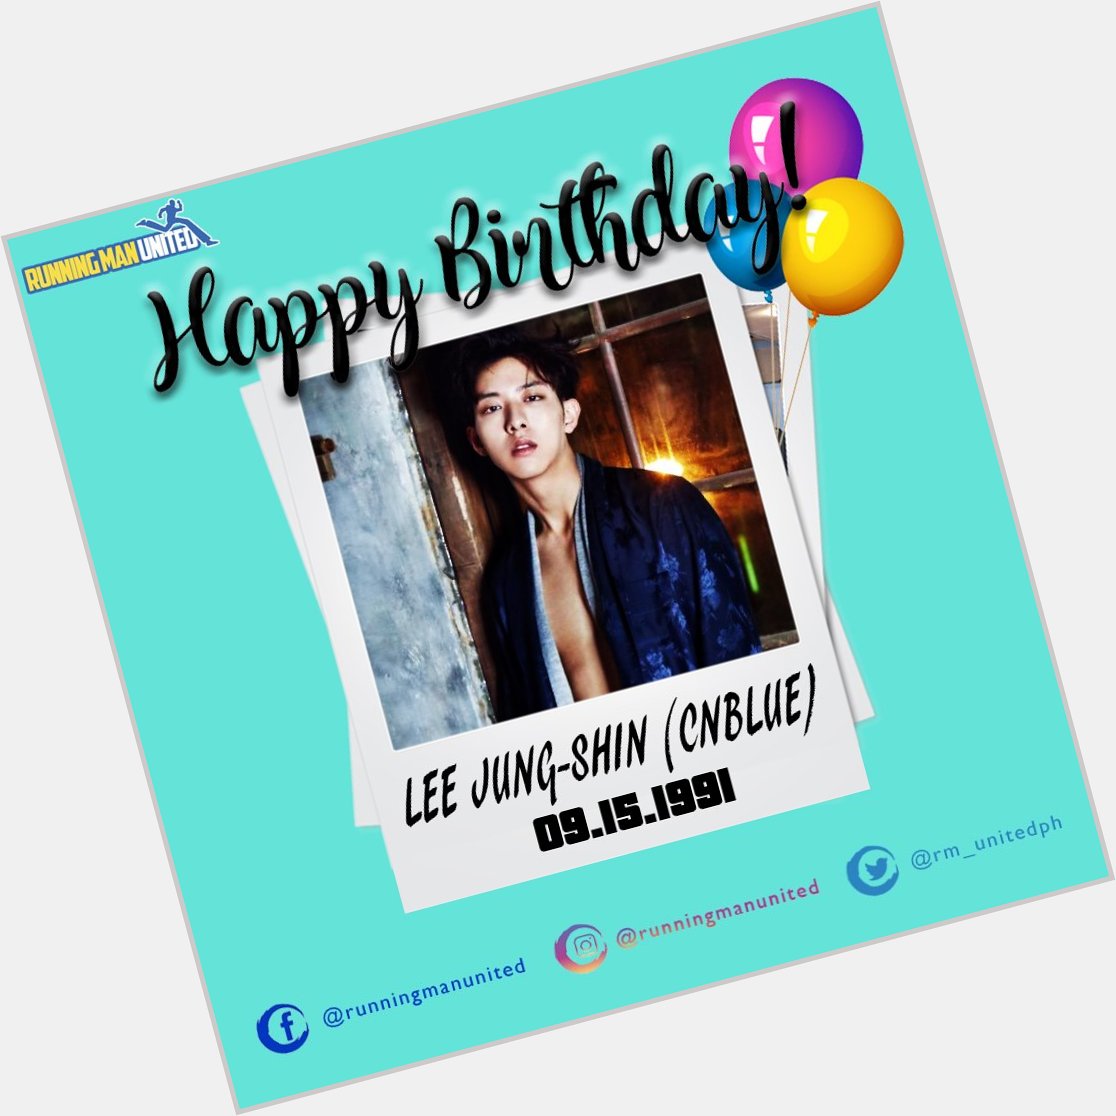 Happy Birthday Lee Jung-shin! 